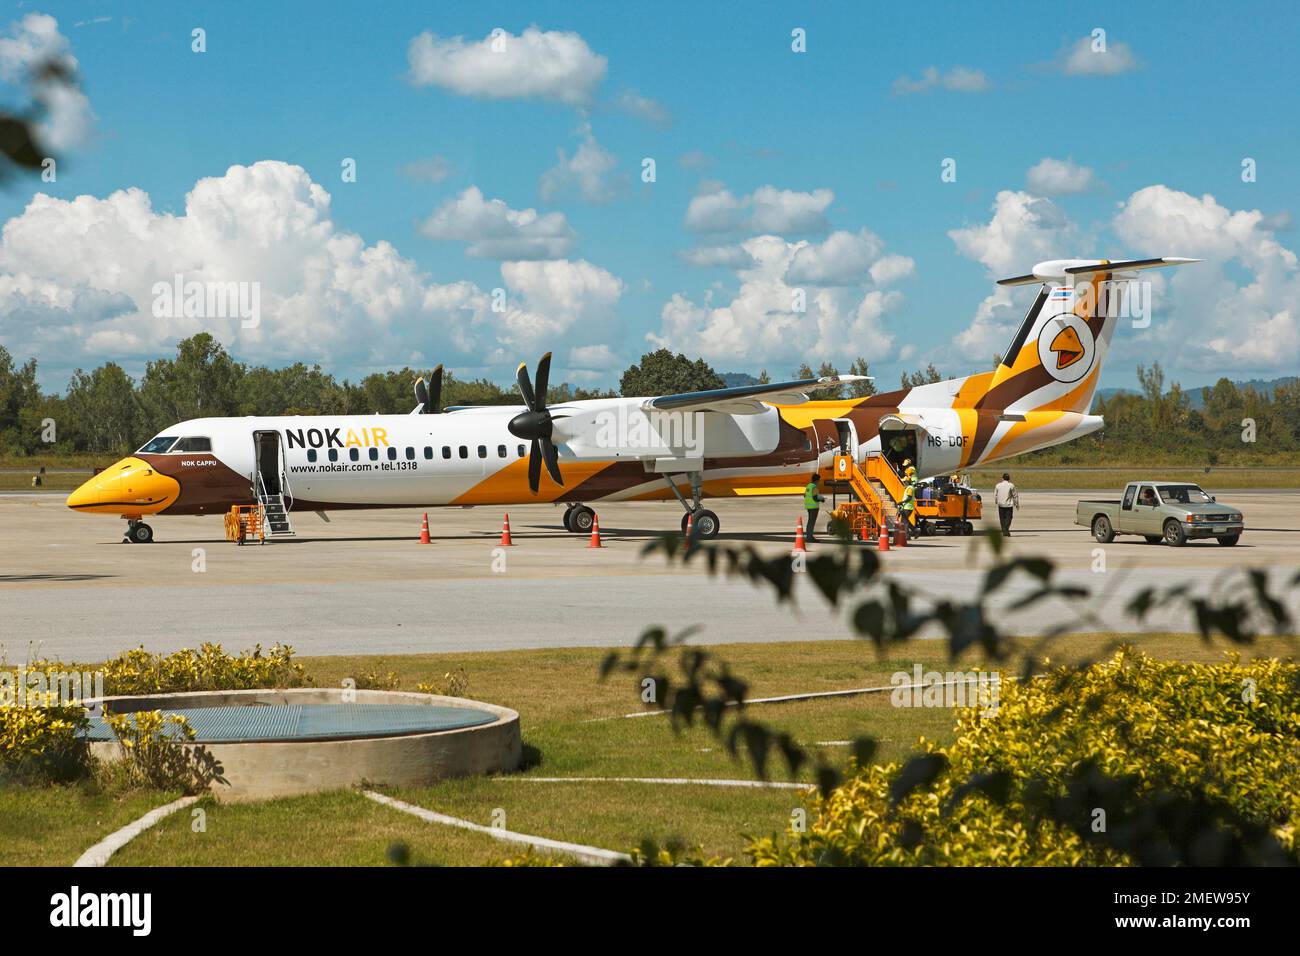 Nok Air aircraft, Ayutthaya, Ayutthaya Province, Thailand Stock Photo